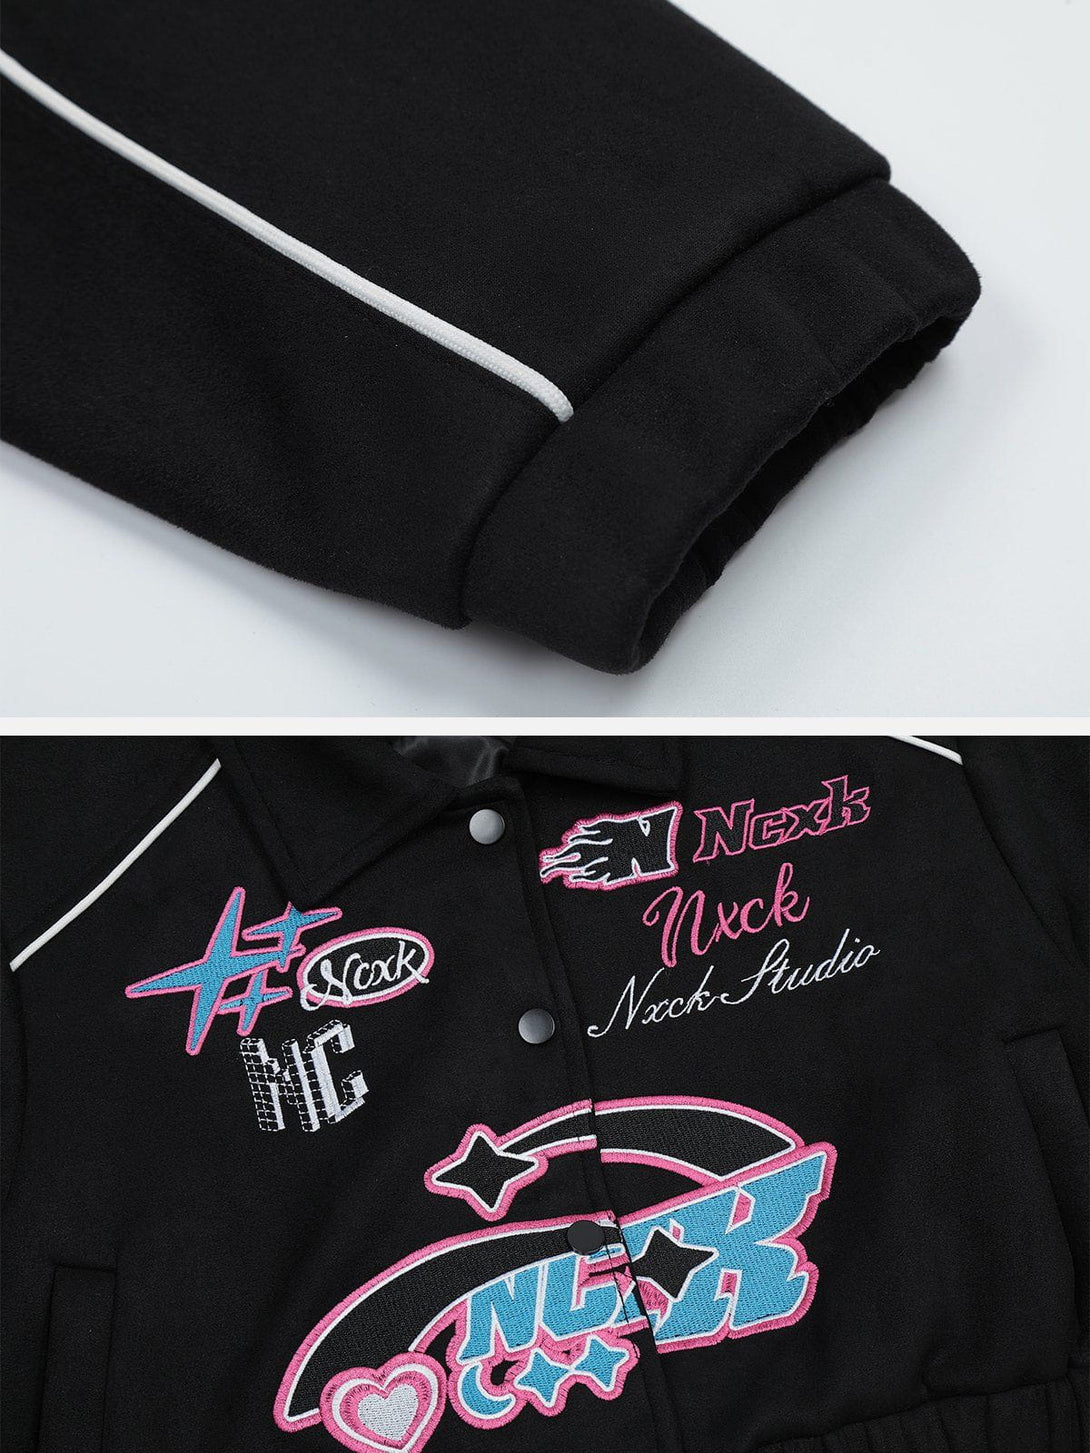 Majesda® - Embroidered Letter Racing Jacket outfit ideas, streetwear fashion - majesda.com